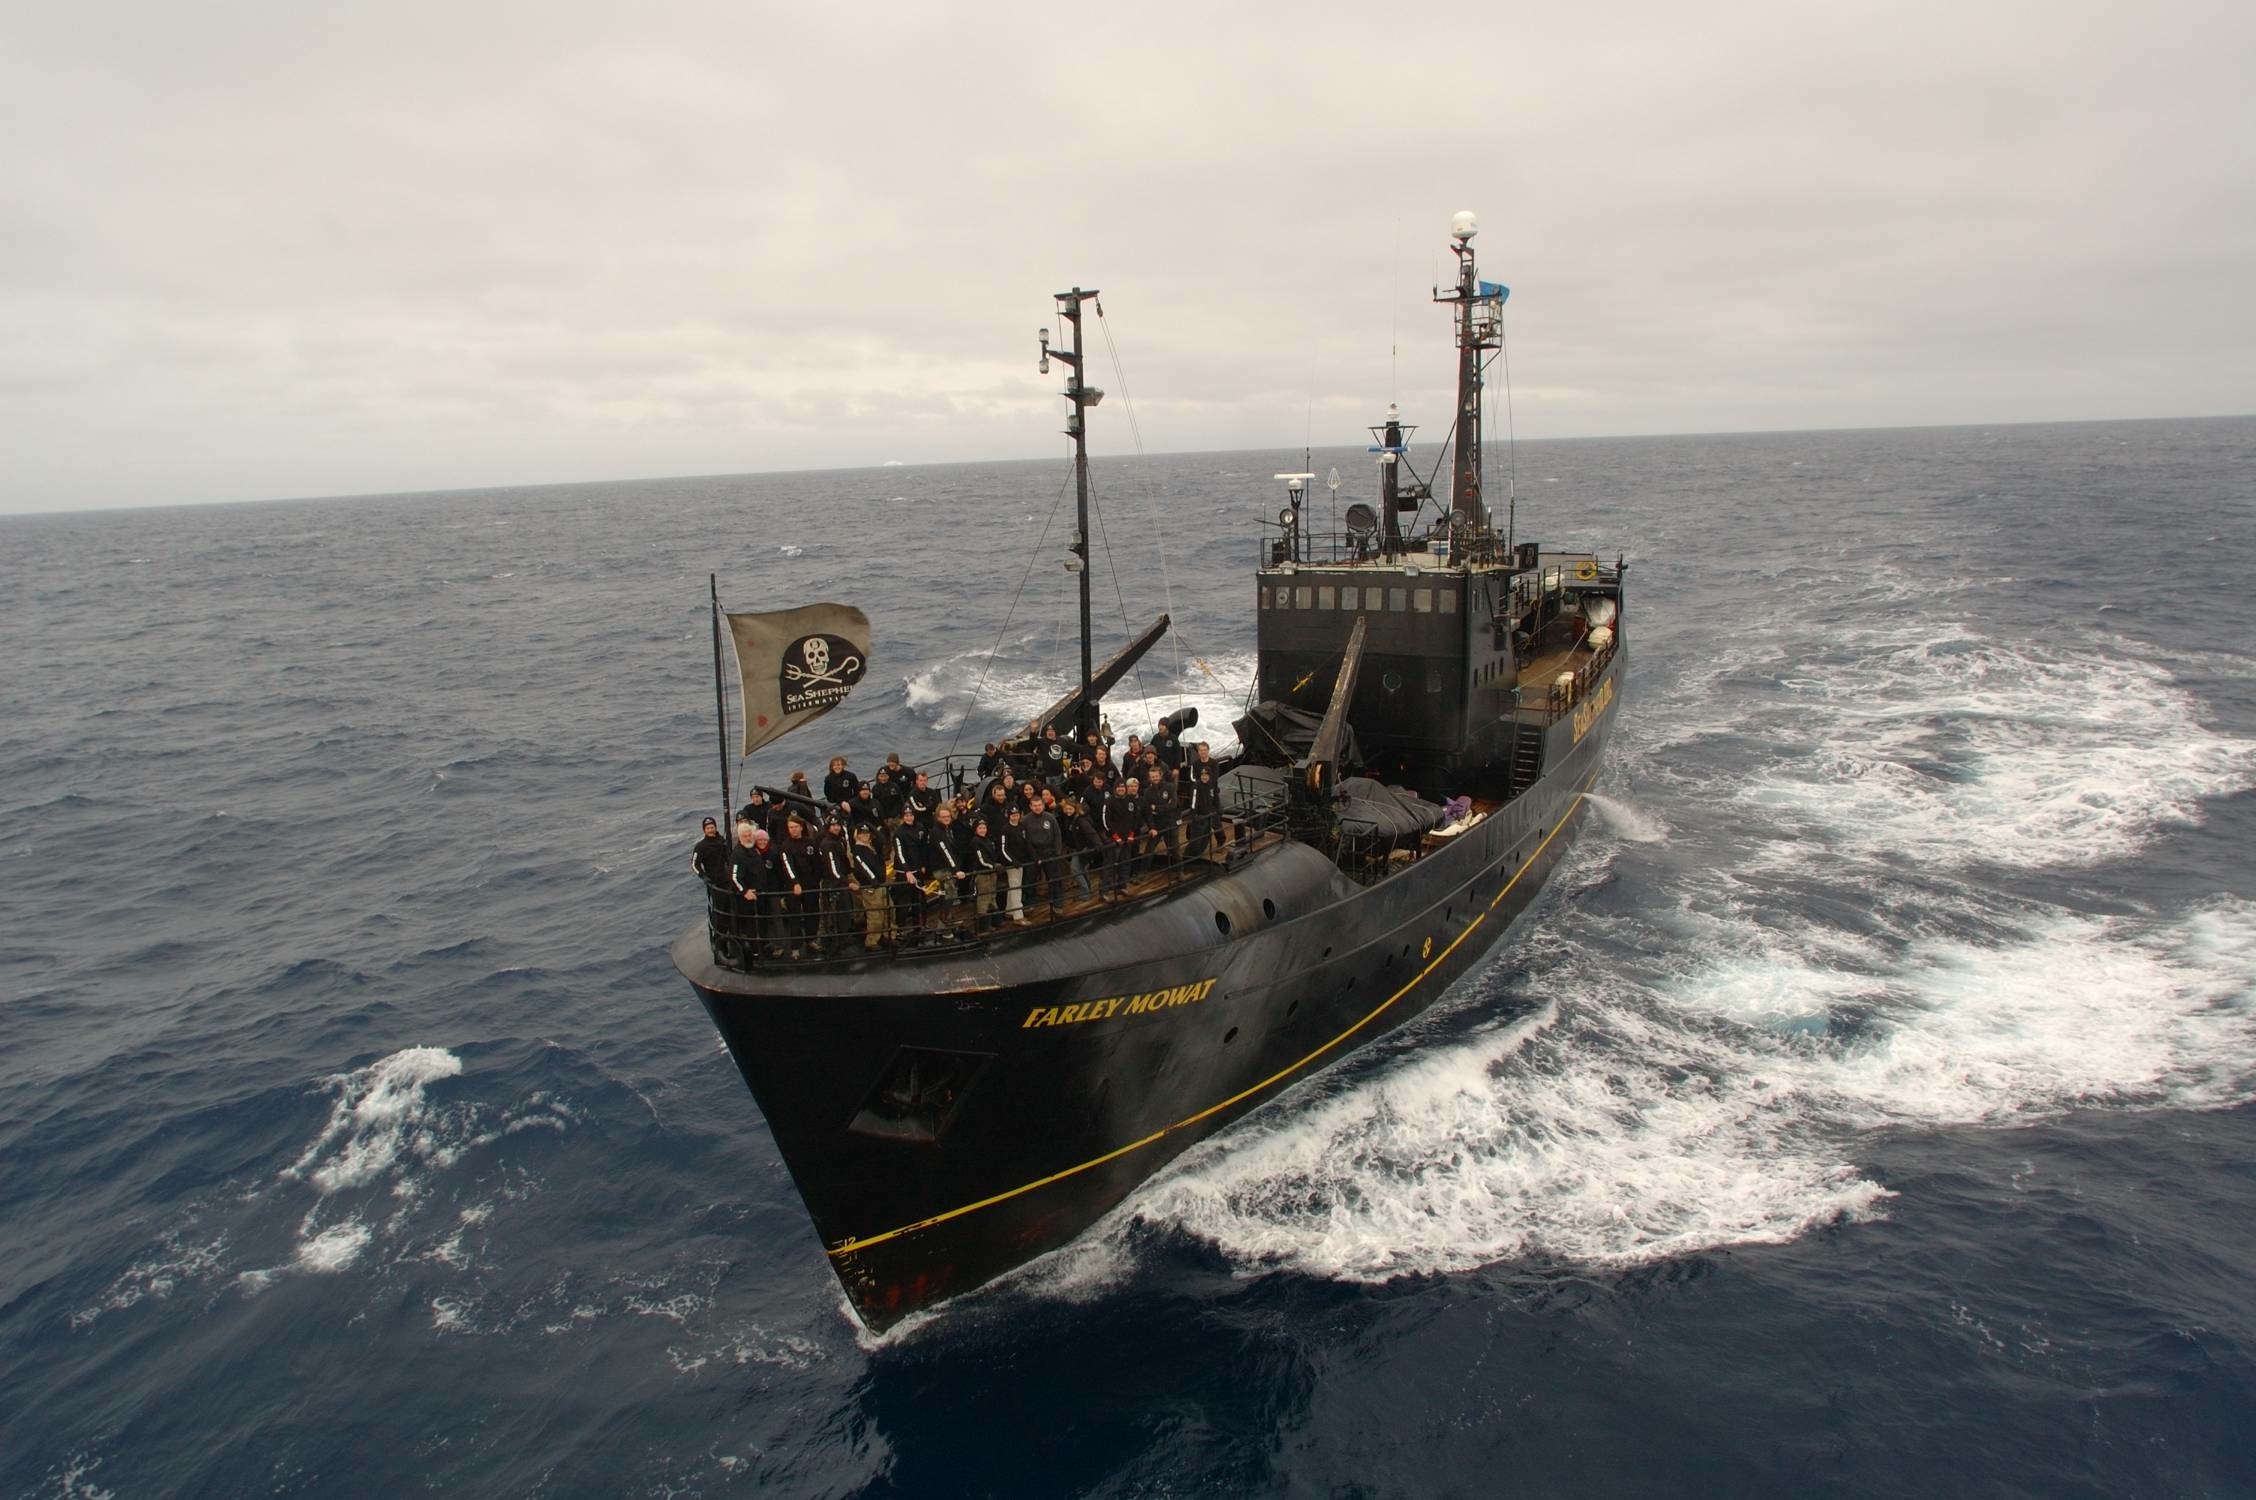 Sea Shepherd: A Movement 